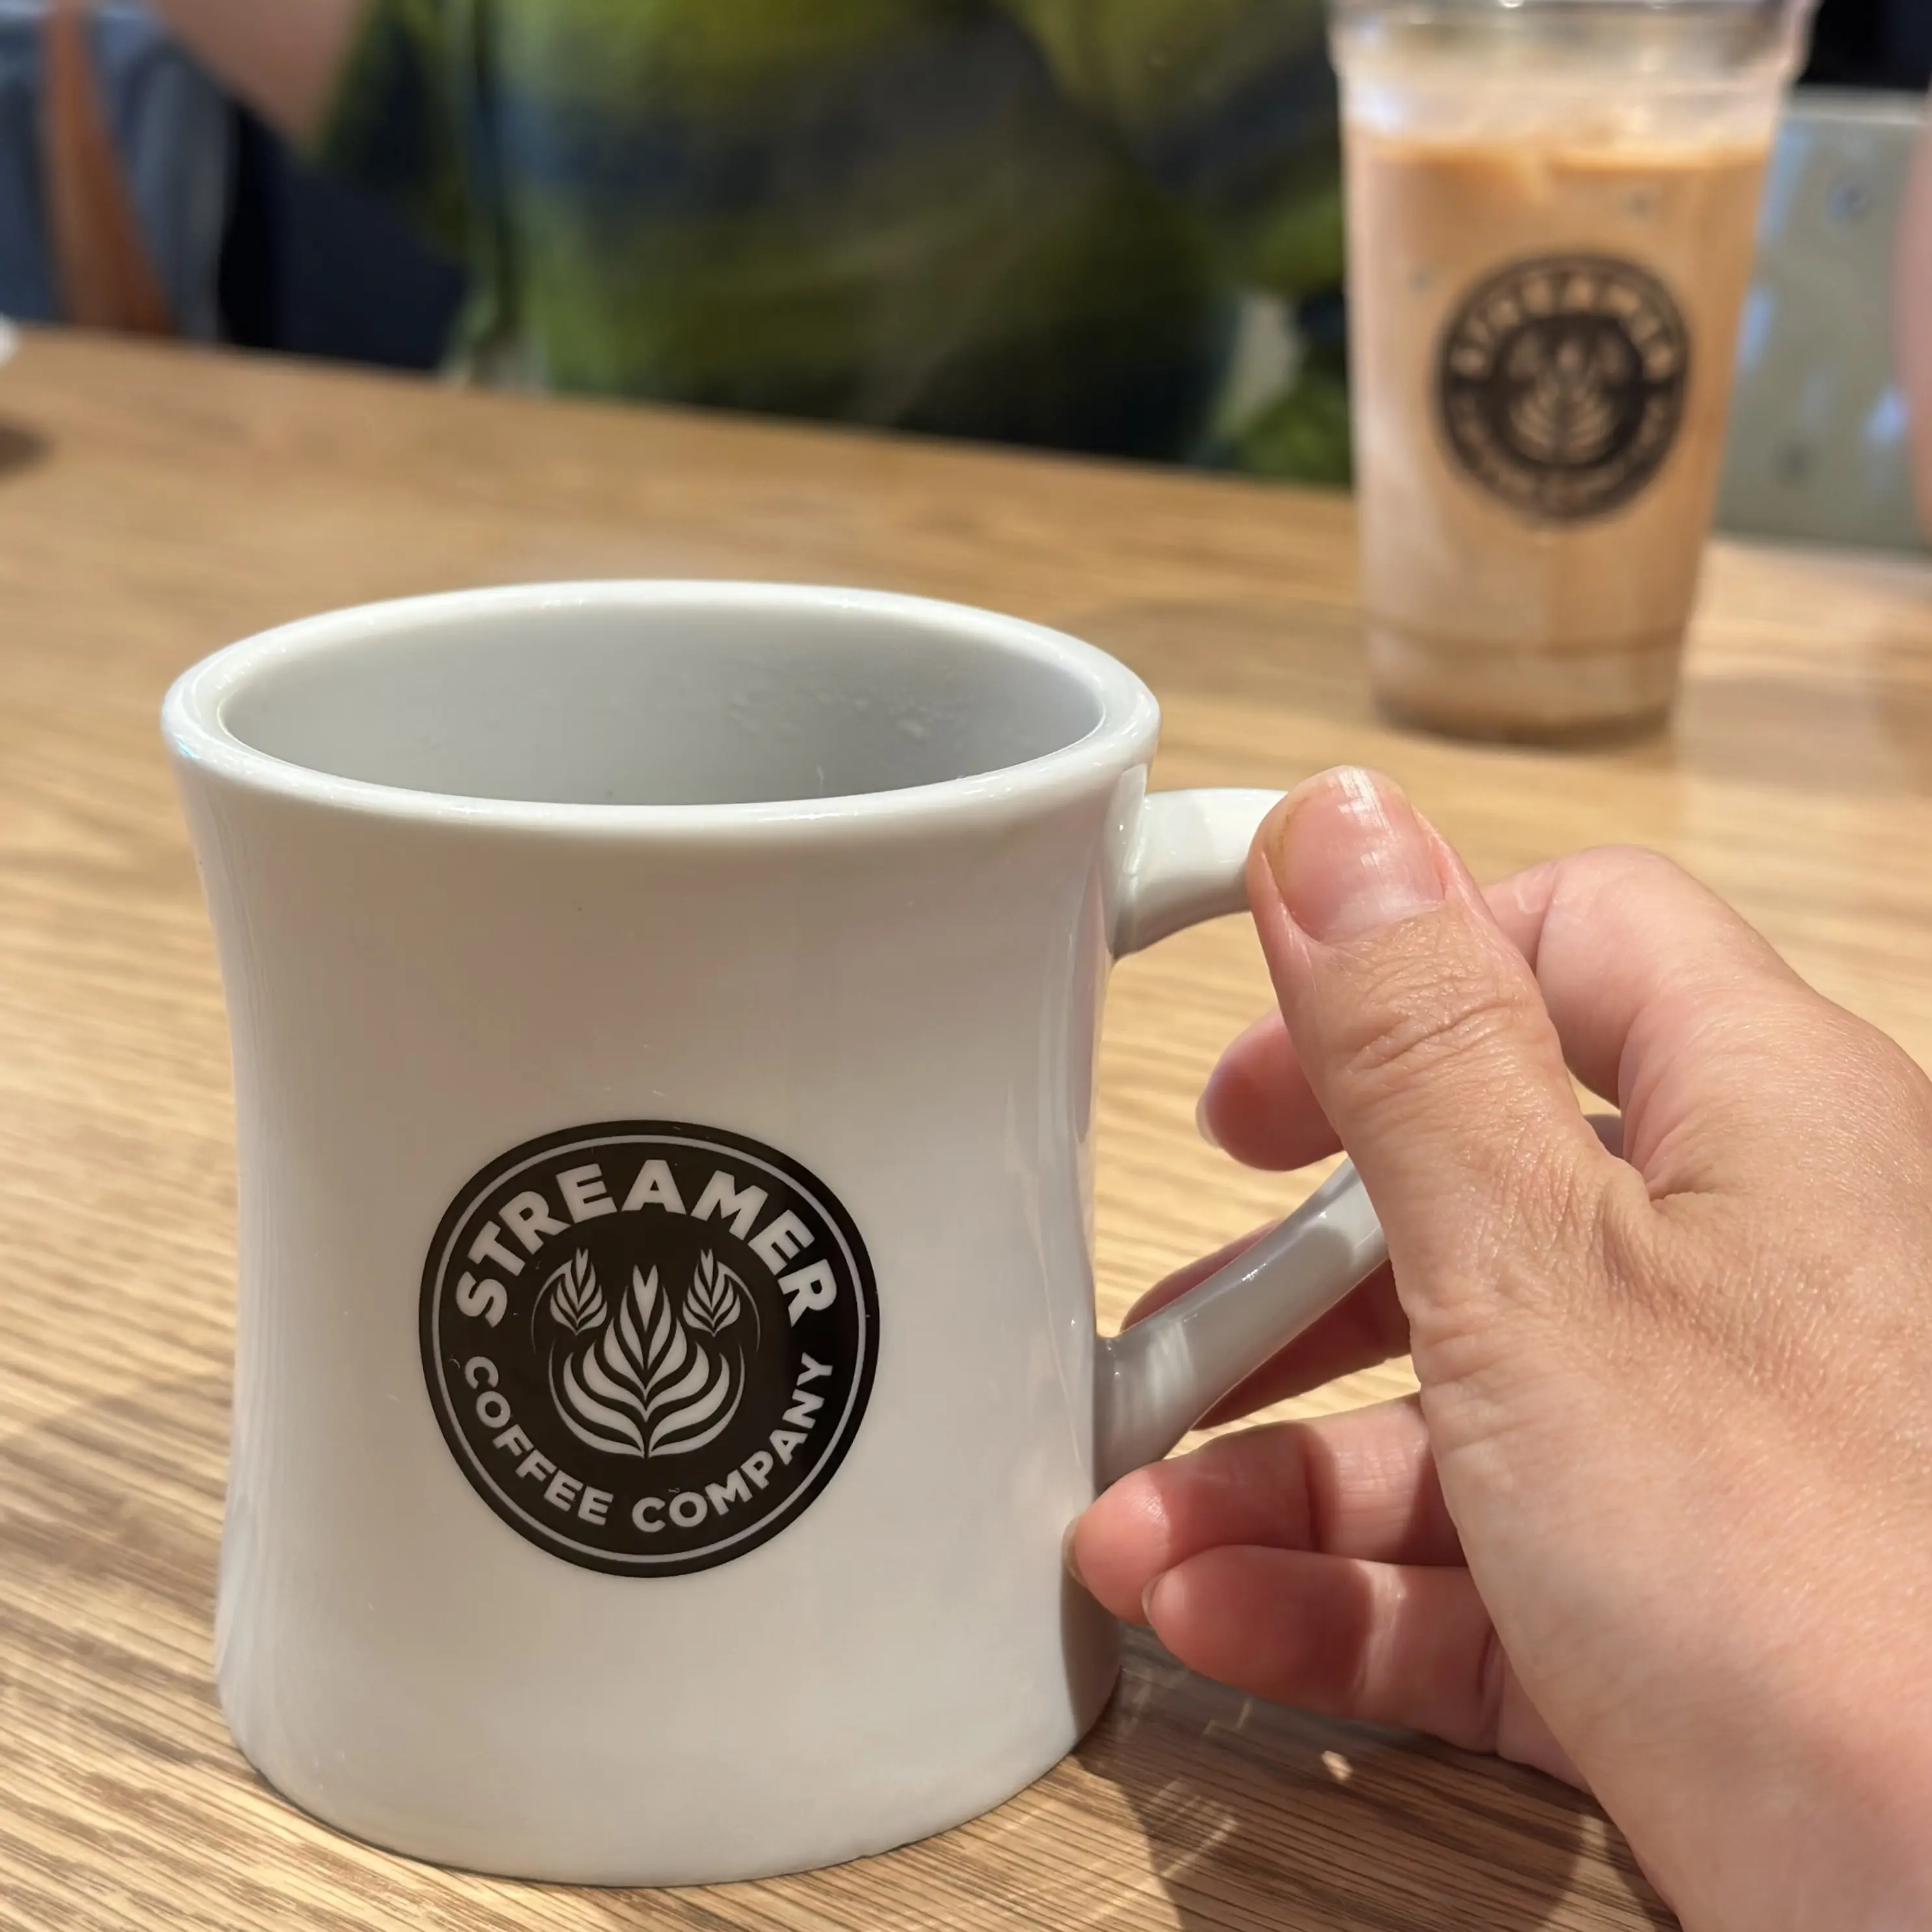 STREAMER COFFEE COMPANY 赤坂店　コーヒー